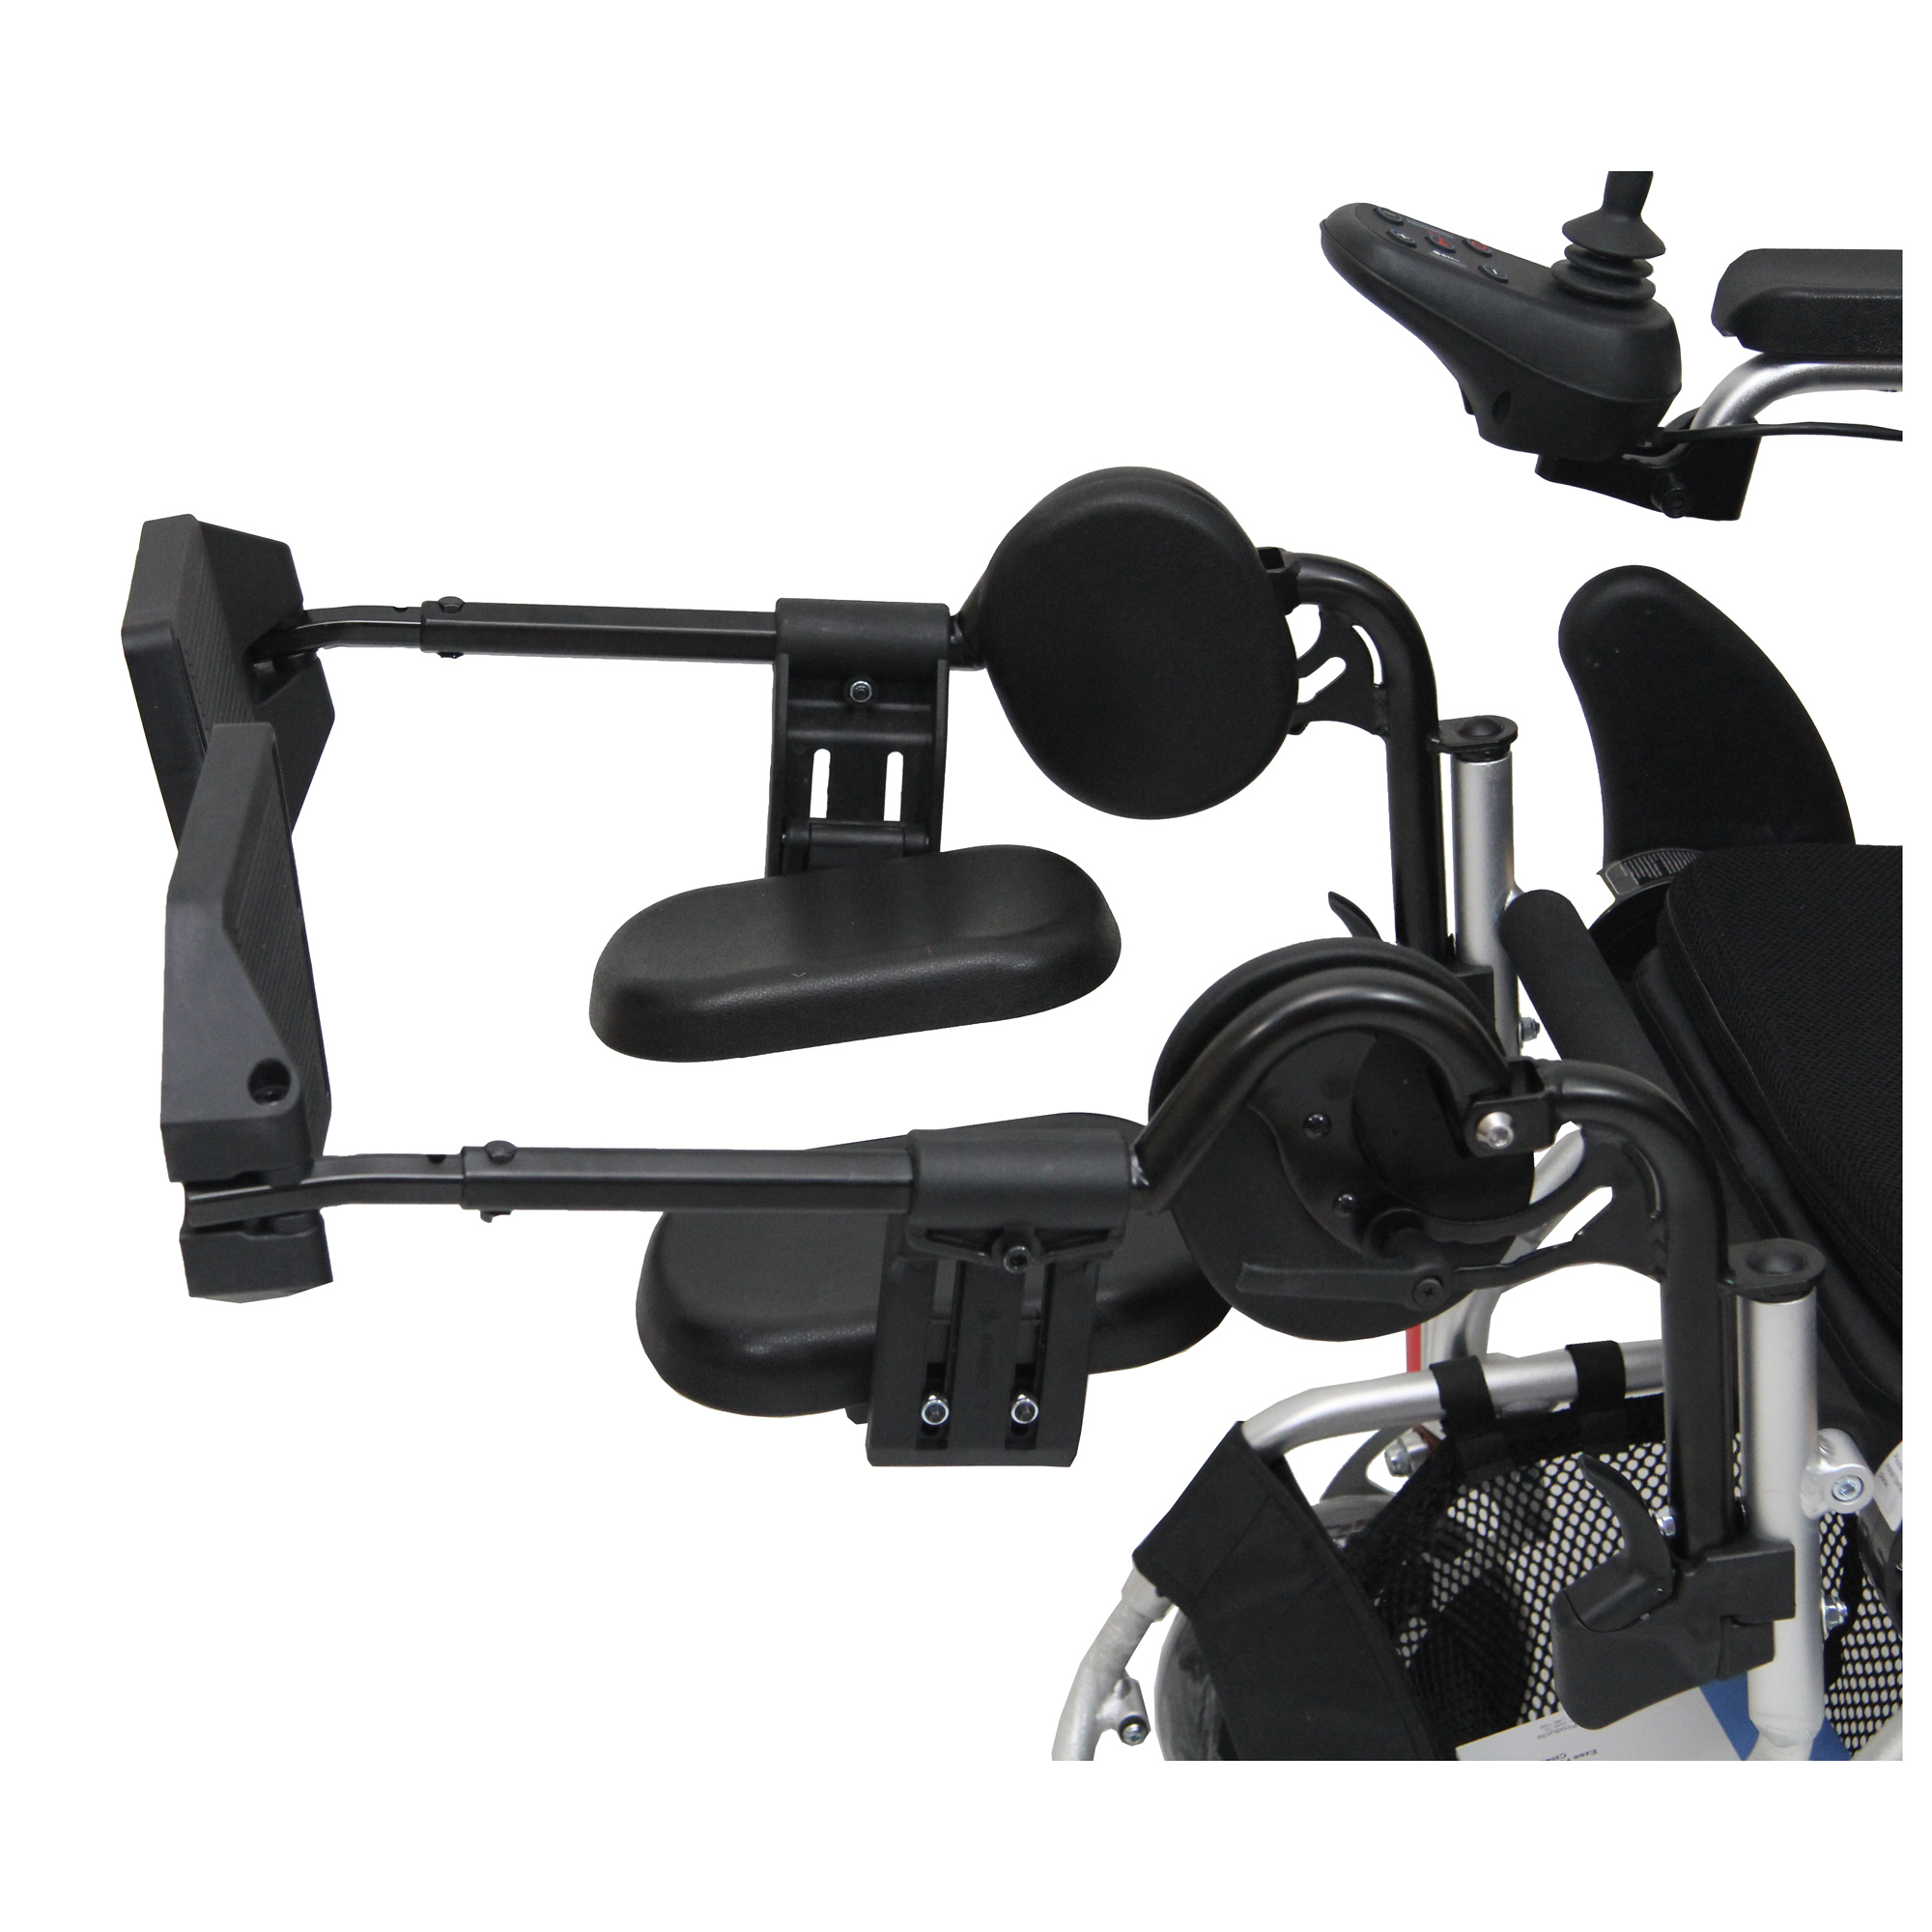 CH4080 3G EZee Fold Wheelchair Image